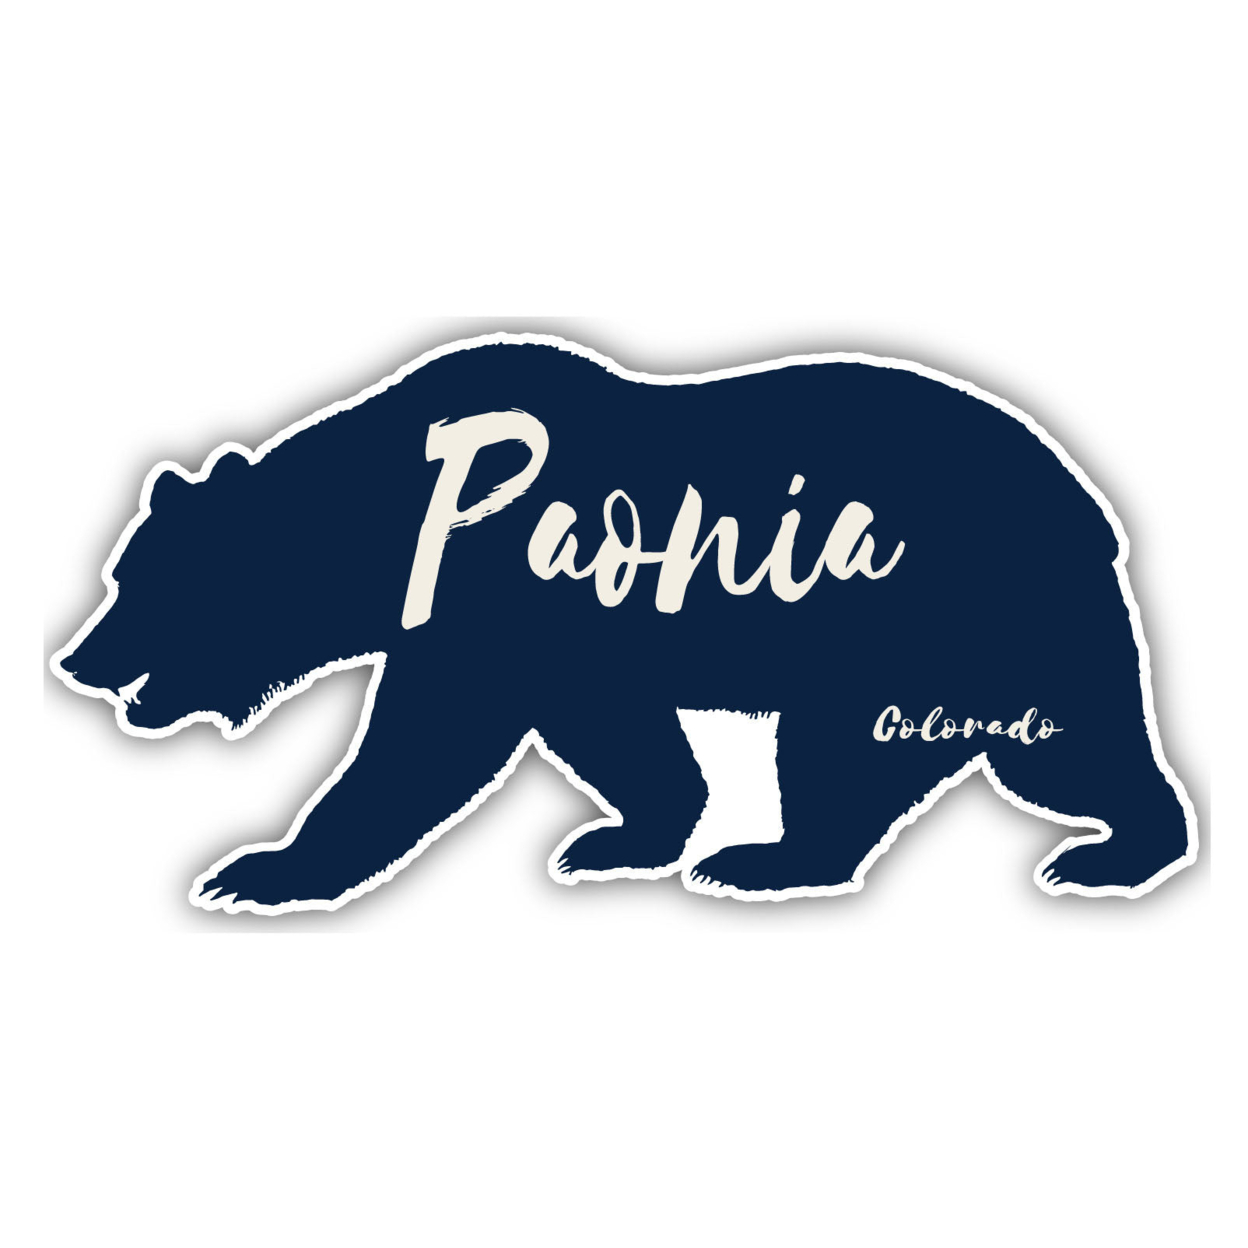 Paonia Colorado Souvenir Decorative Stickers (Choose Theme And Size) - Single Unit, 4-Inch, Bear